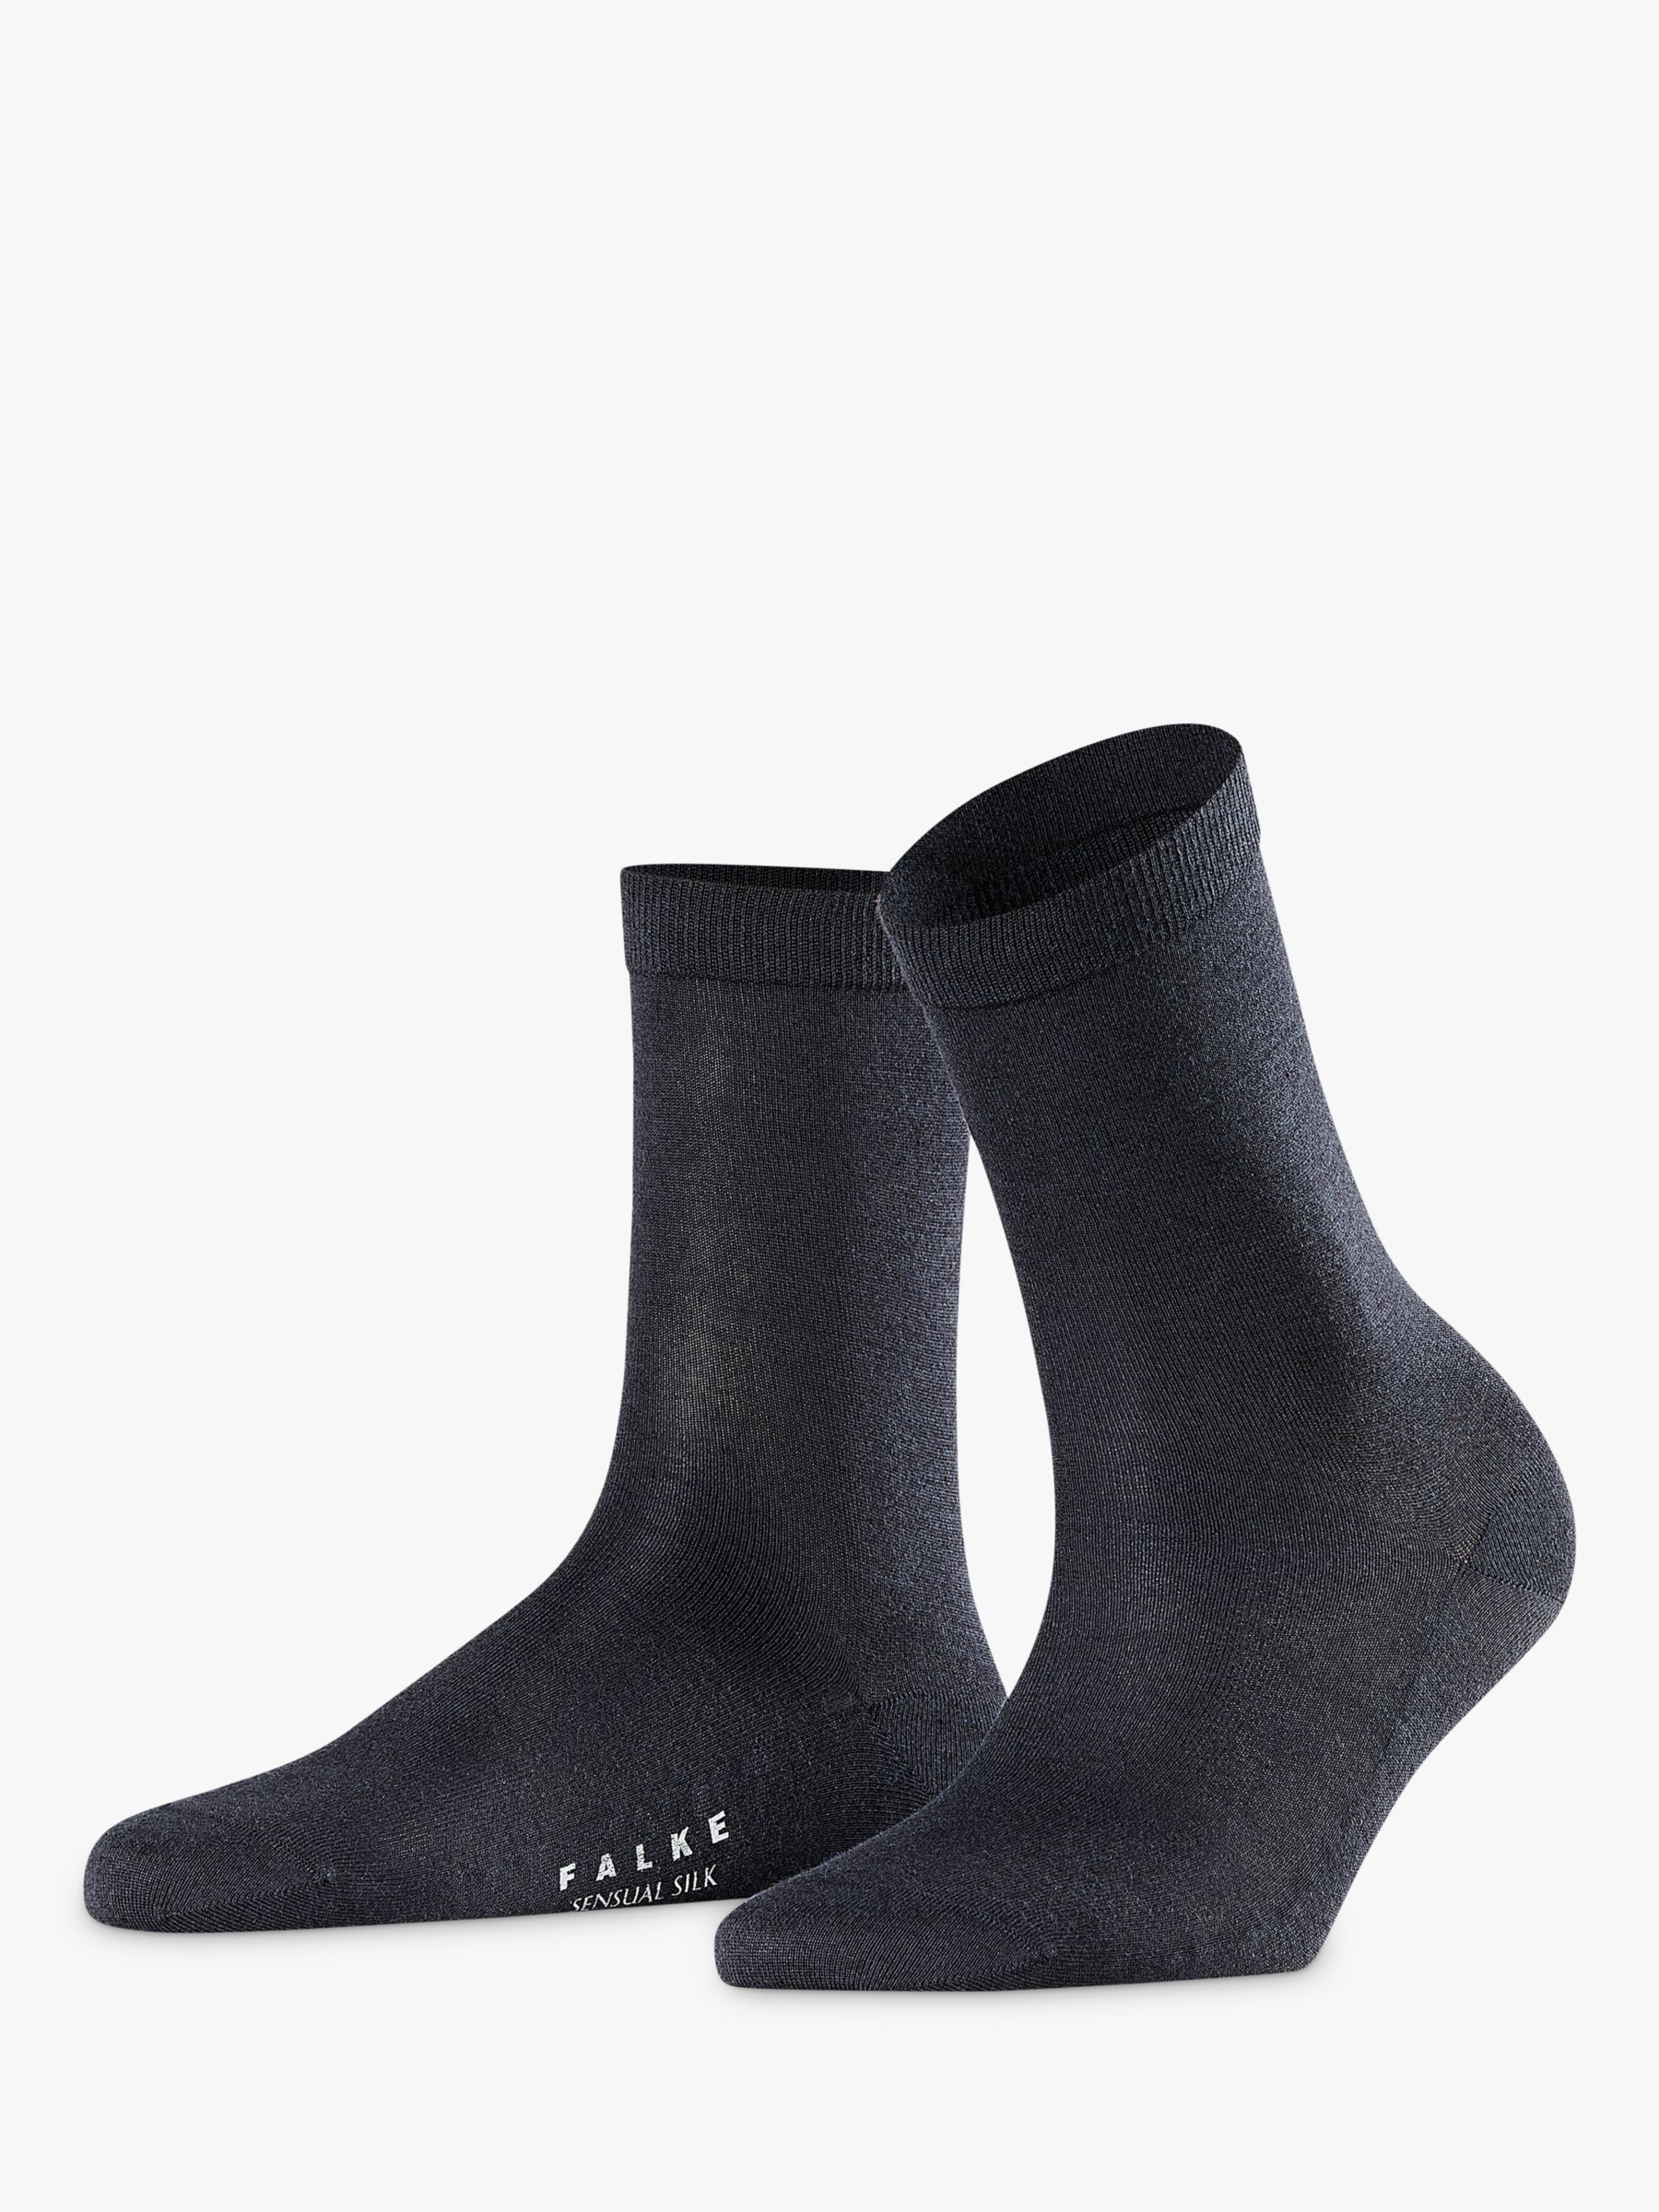 FALKE Sensual Silk Mix Ankle Socks, Dark Navy at John Lewis & Partners